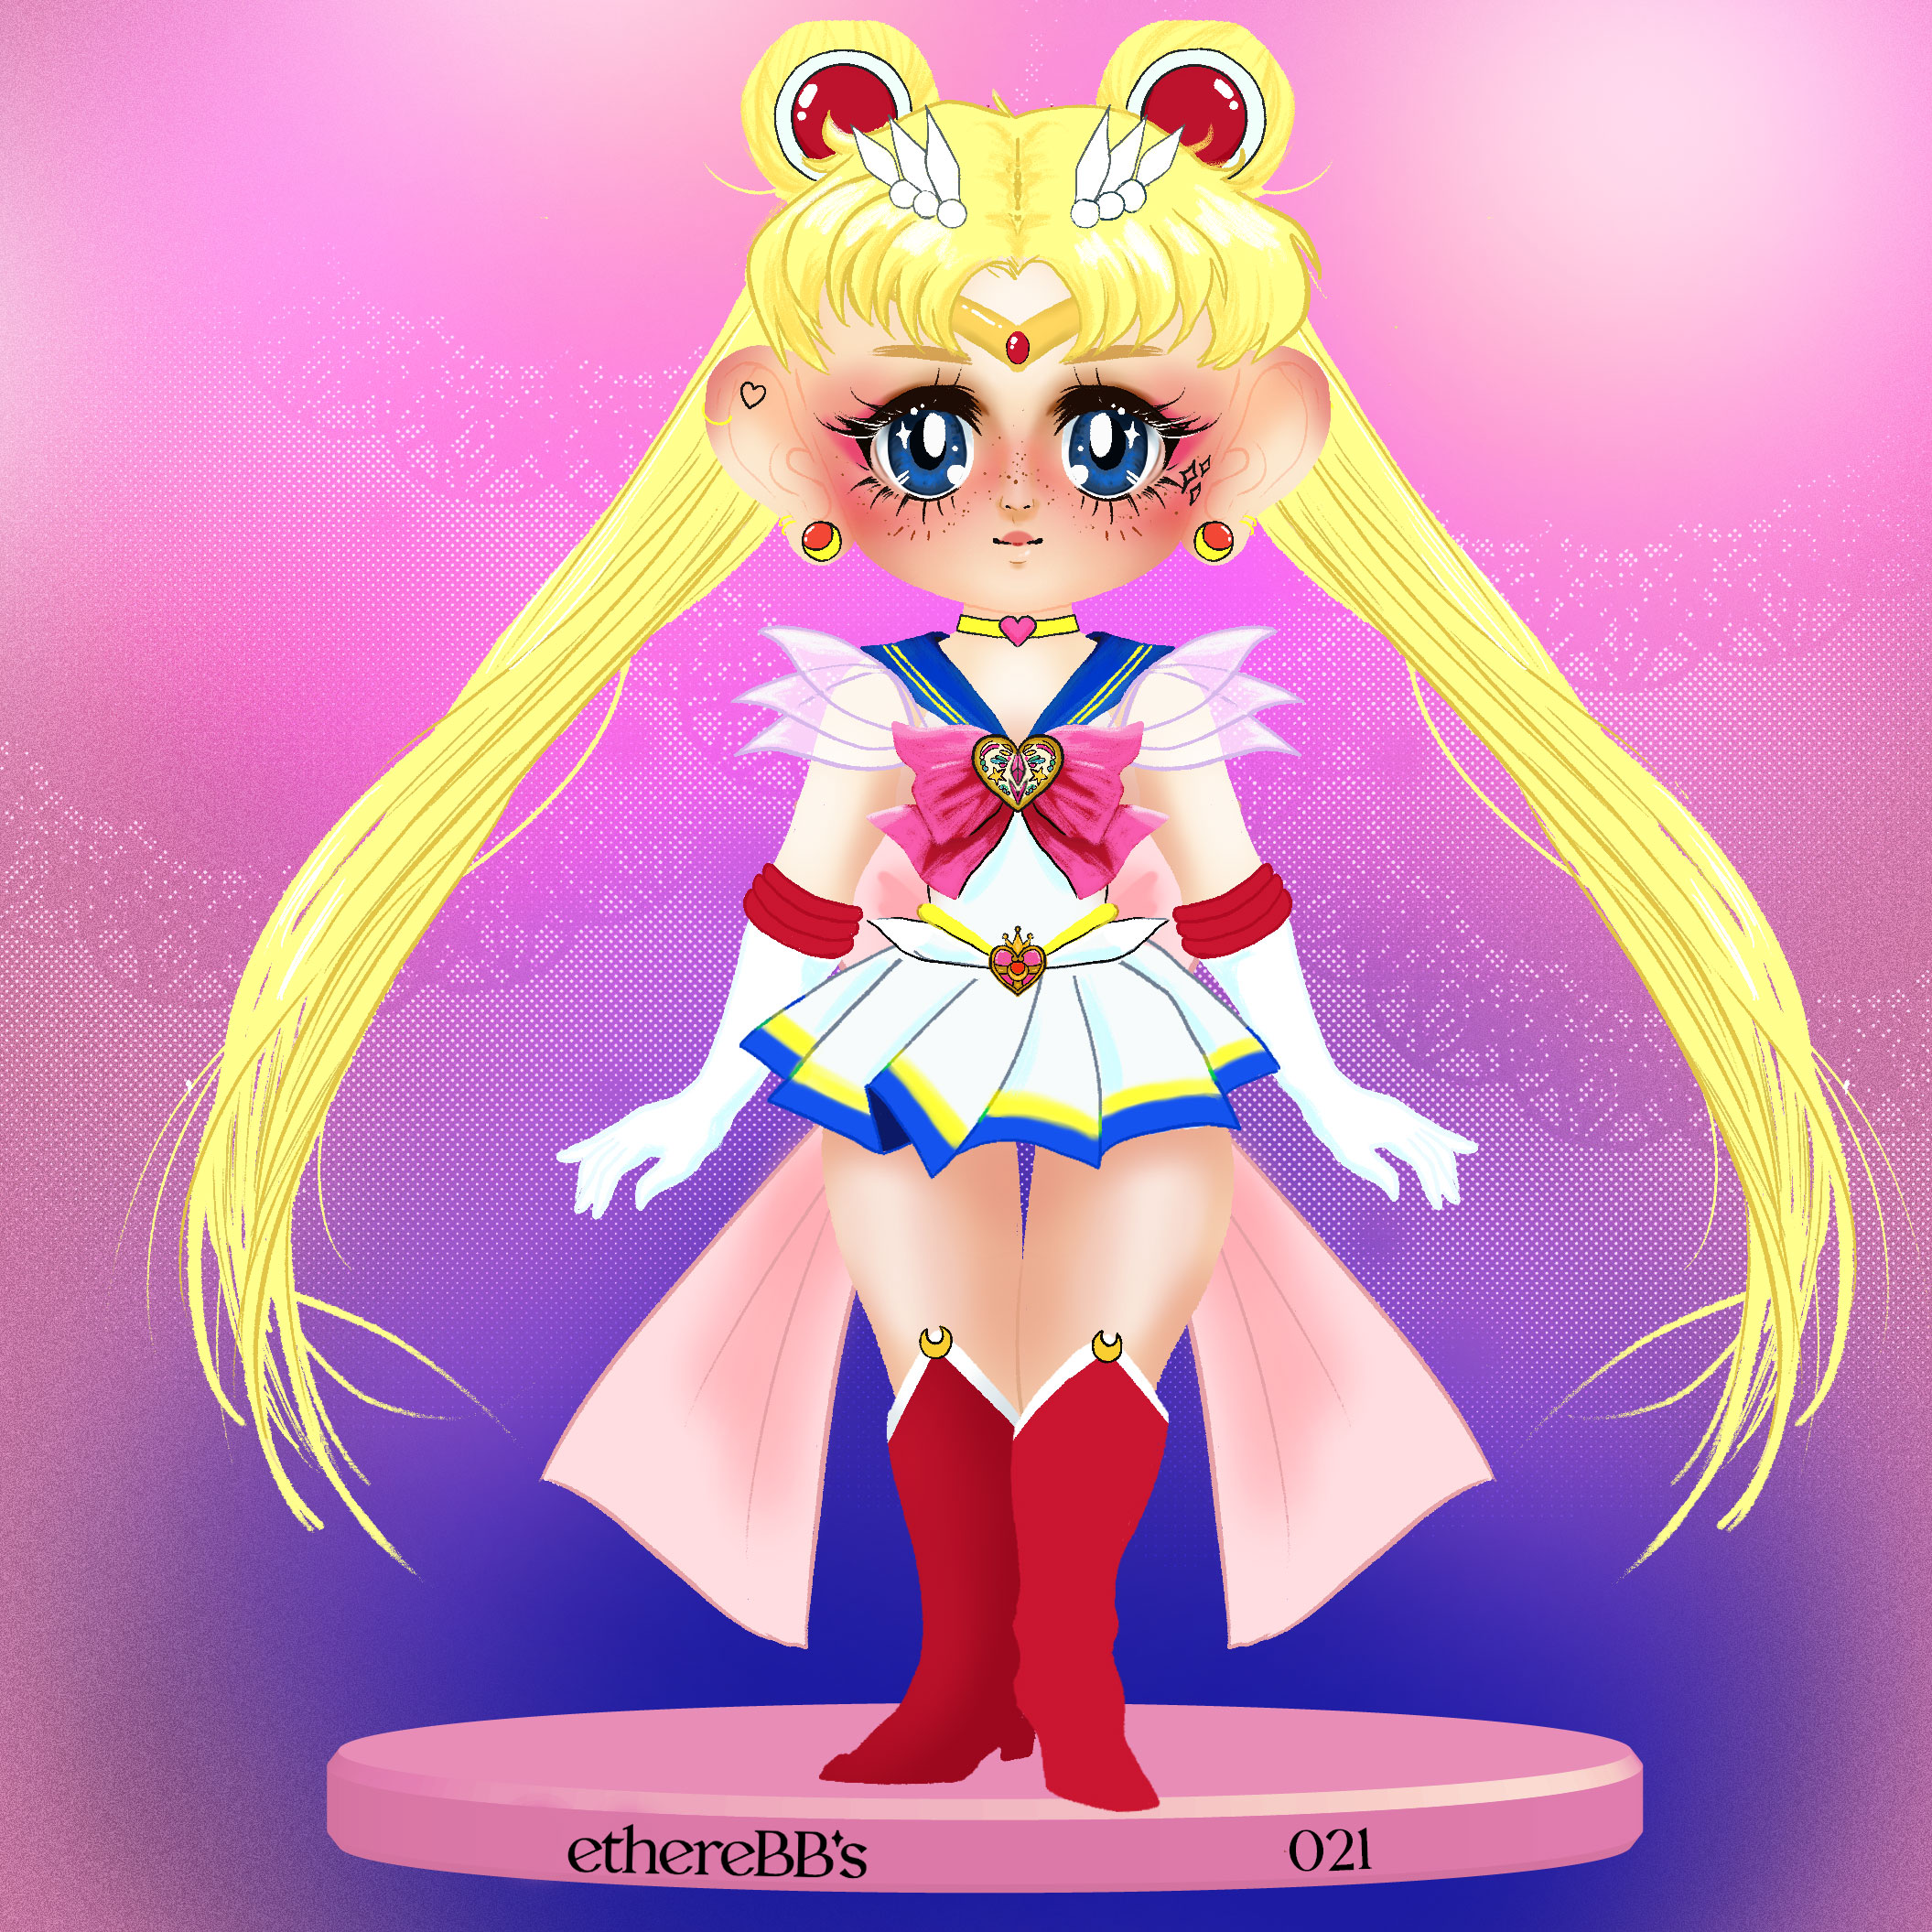 [ethereBB 021] Sailor Moon